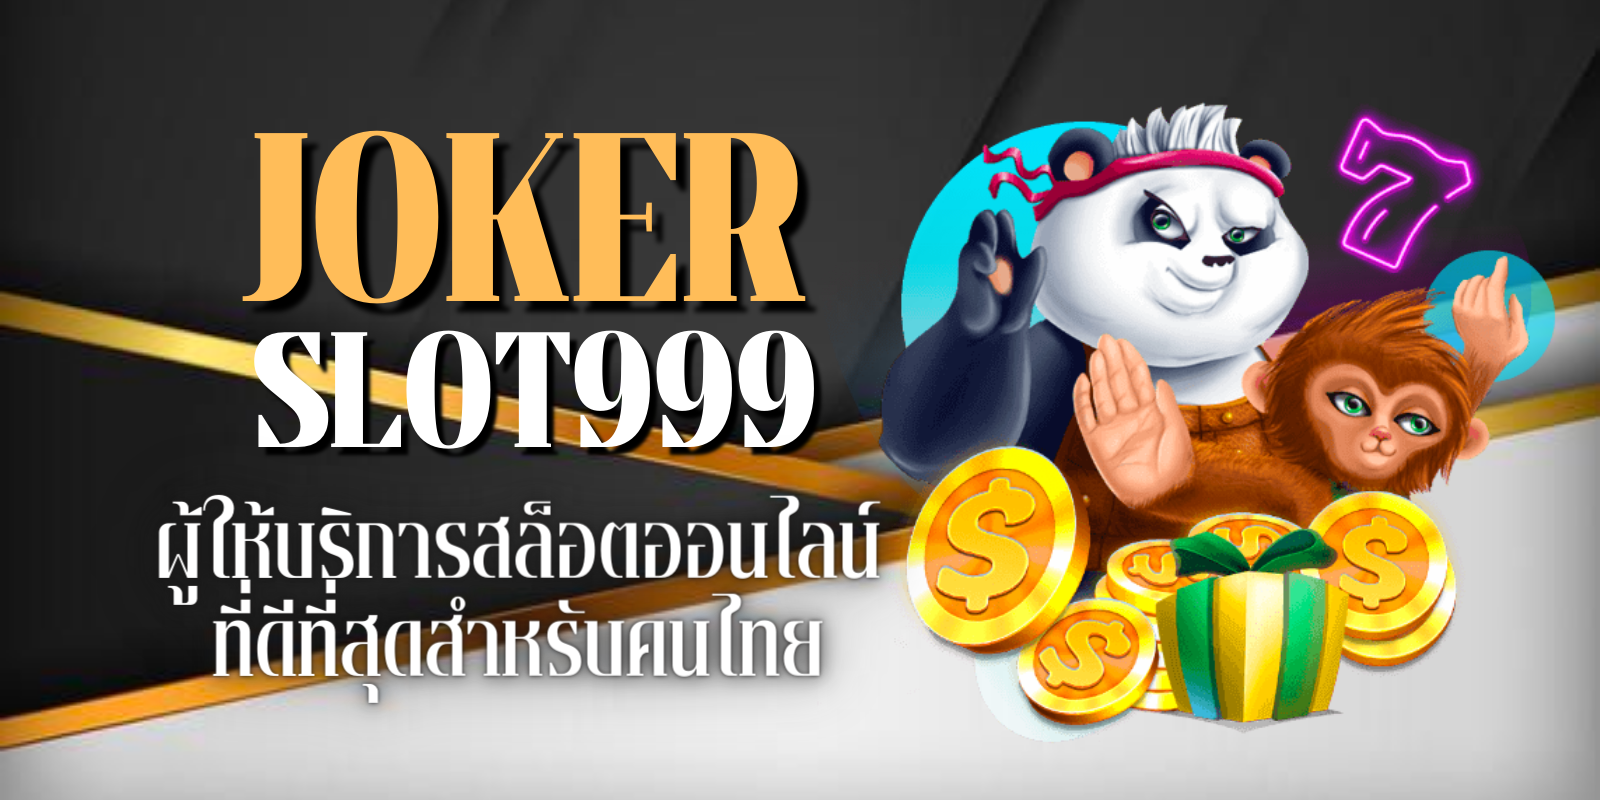 joker slot999 ผู้ให้บริการสล็อตออนไลน์ ที่ดีที่สุดสำหรับคนไทย